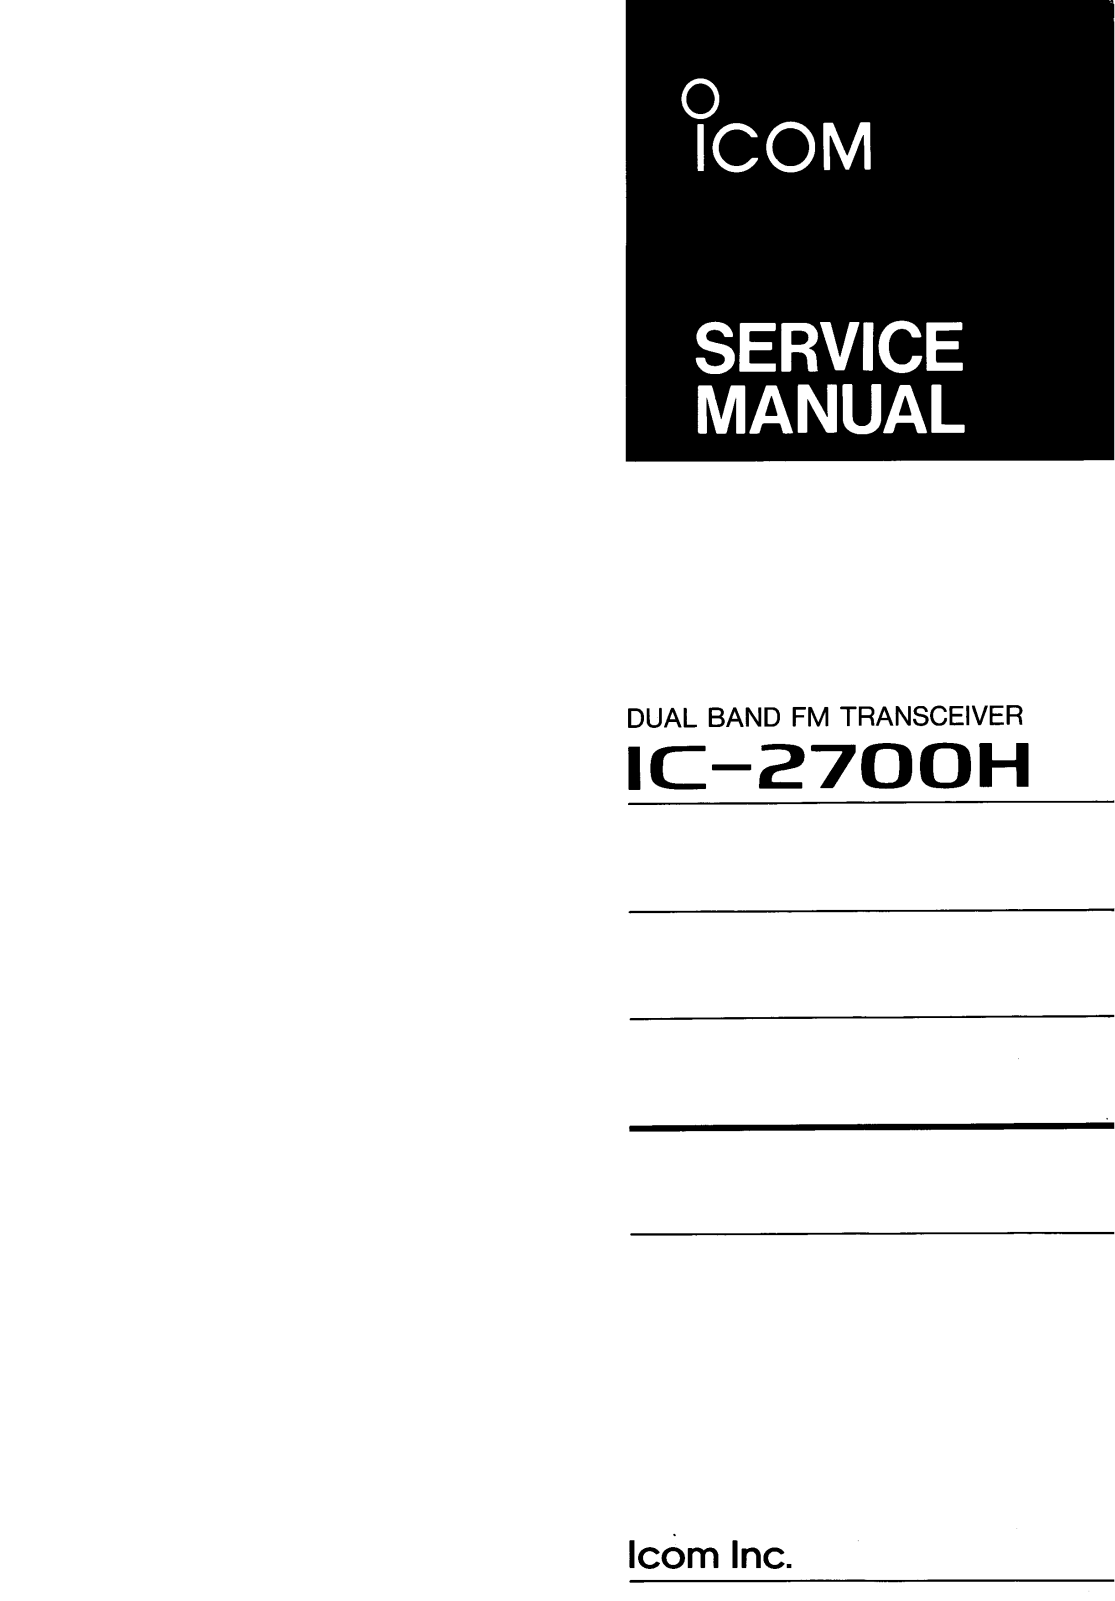 Icom IC-2700H Service Manual